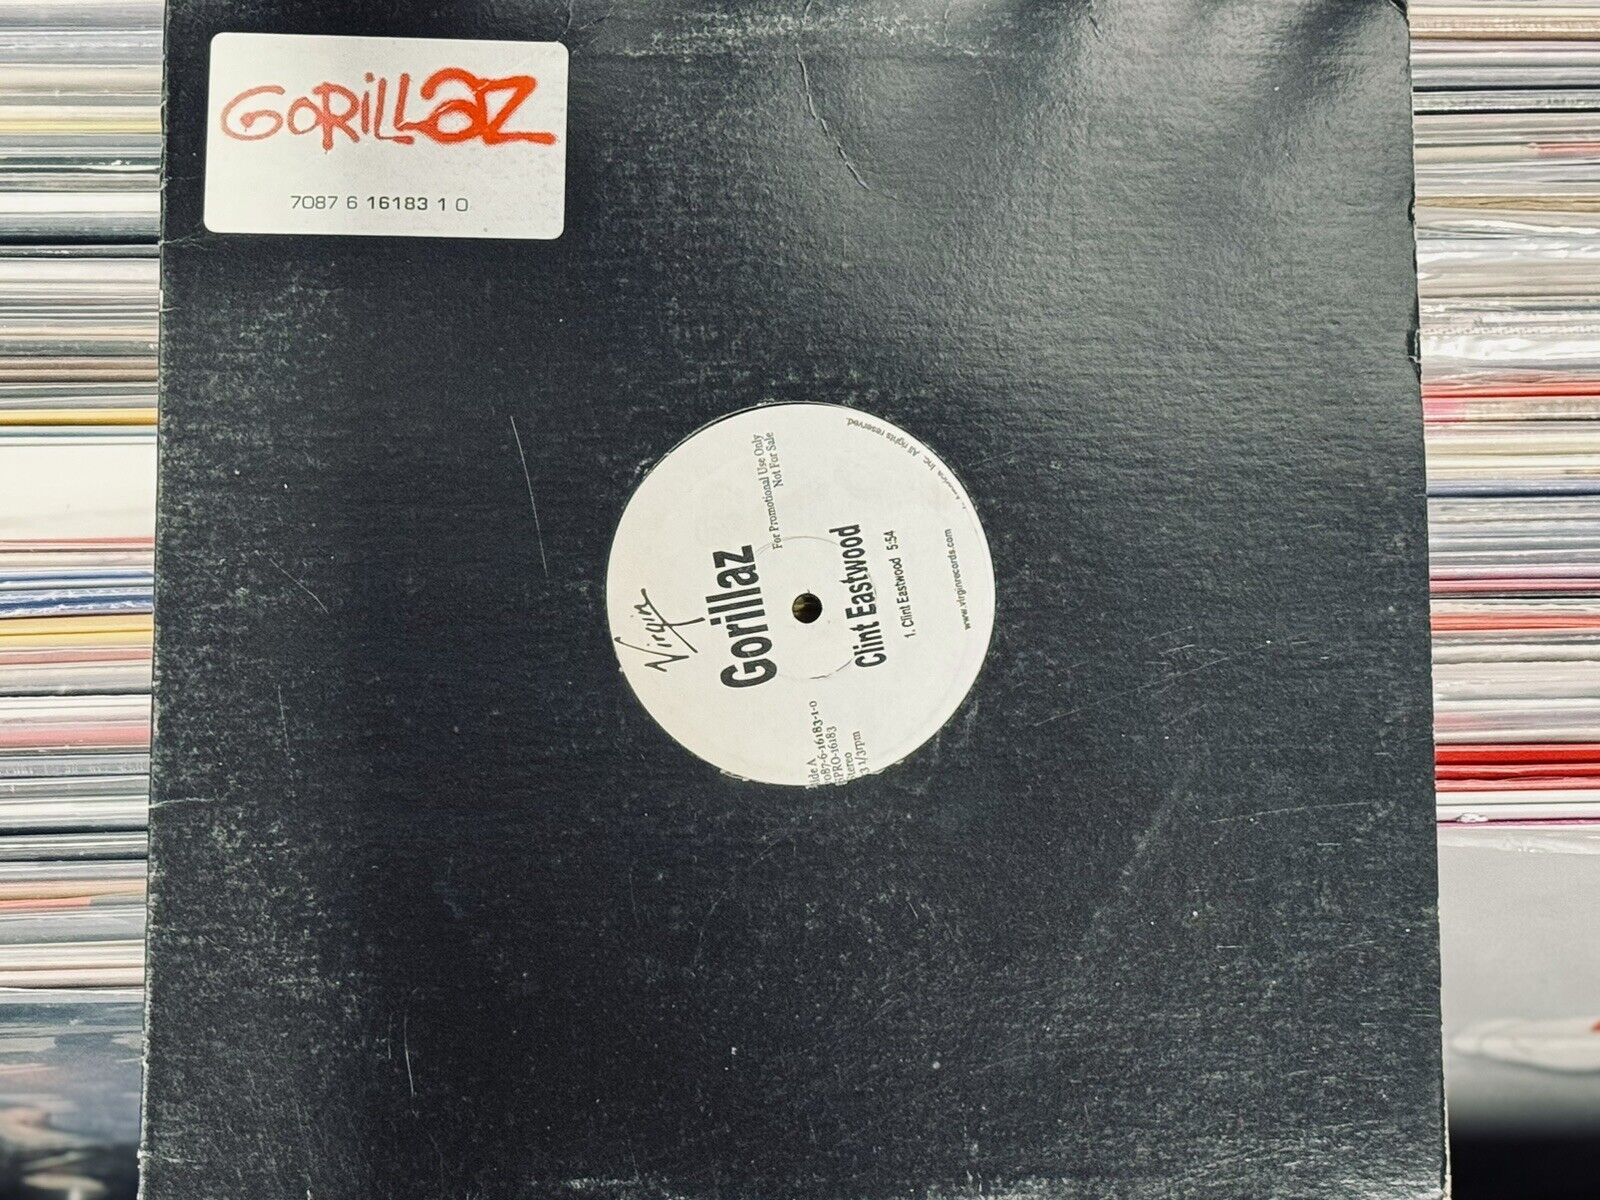 FIRST PRESSING / PROMO - 2001 GORILLAZ  “Clint Eastwood” 12” Remixes Vinyl